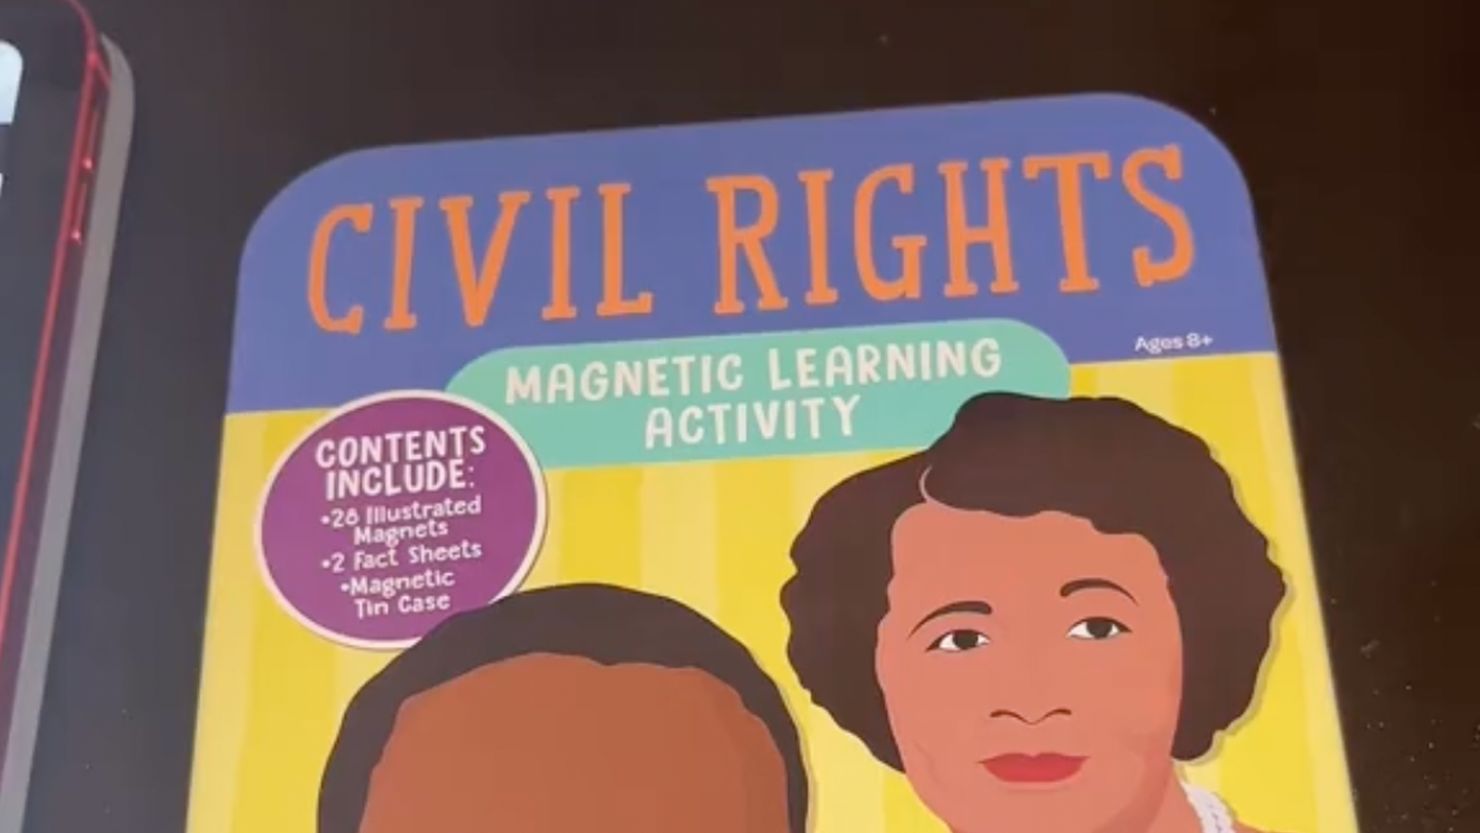 Target pulls Black history item that misidentified Civil Rights